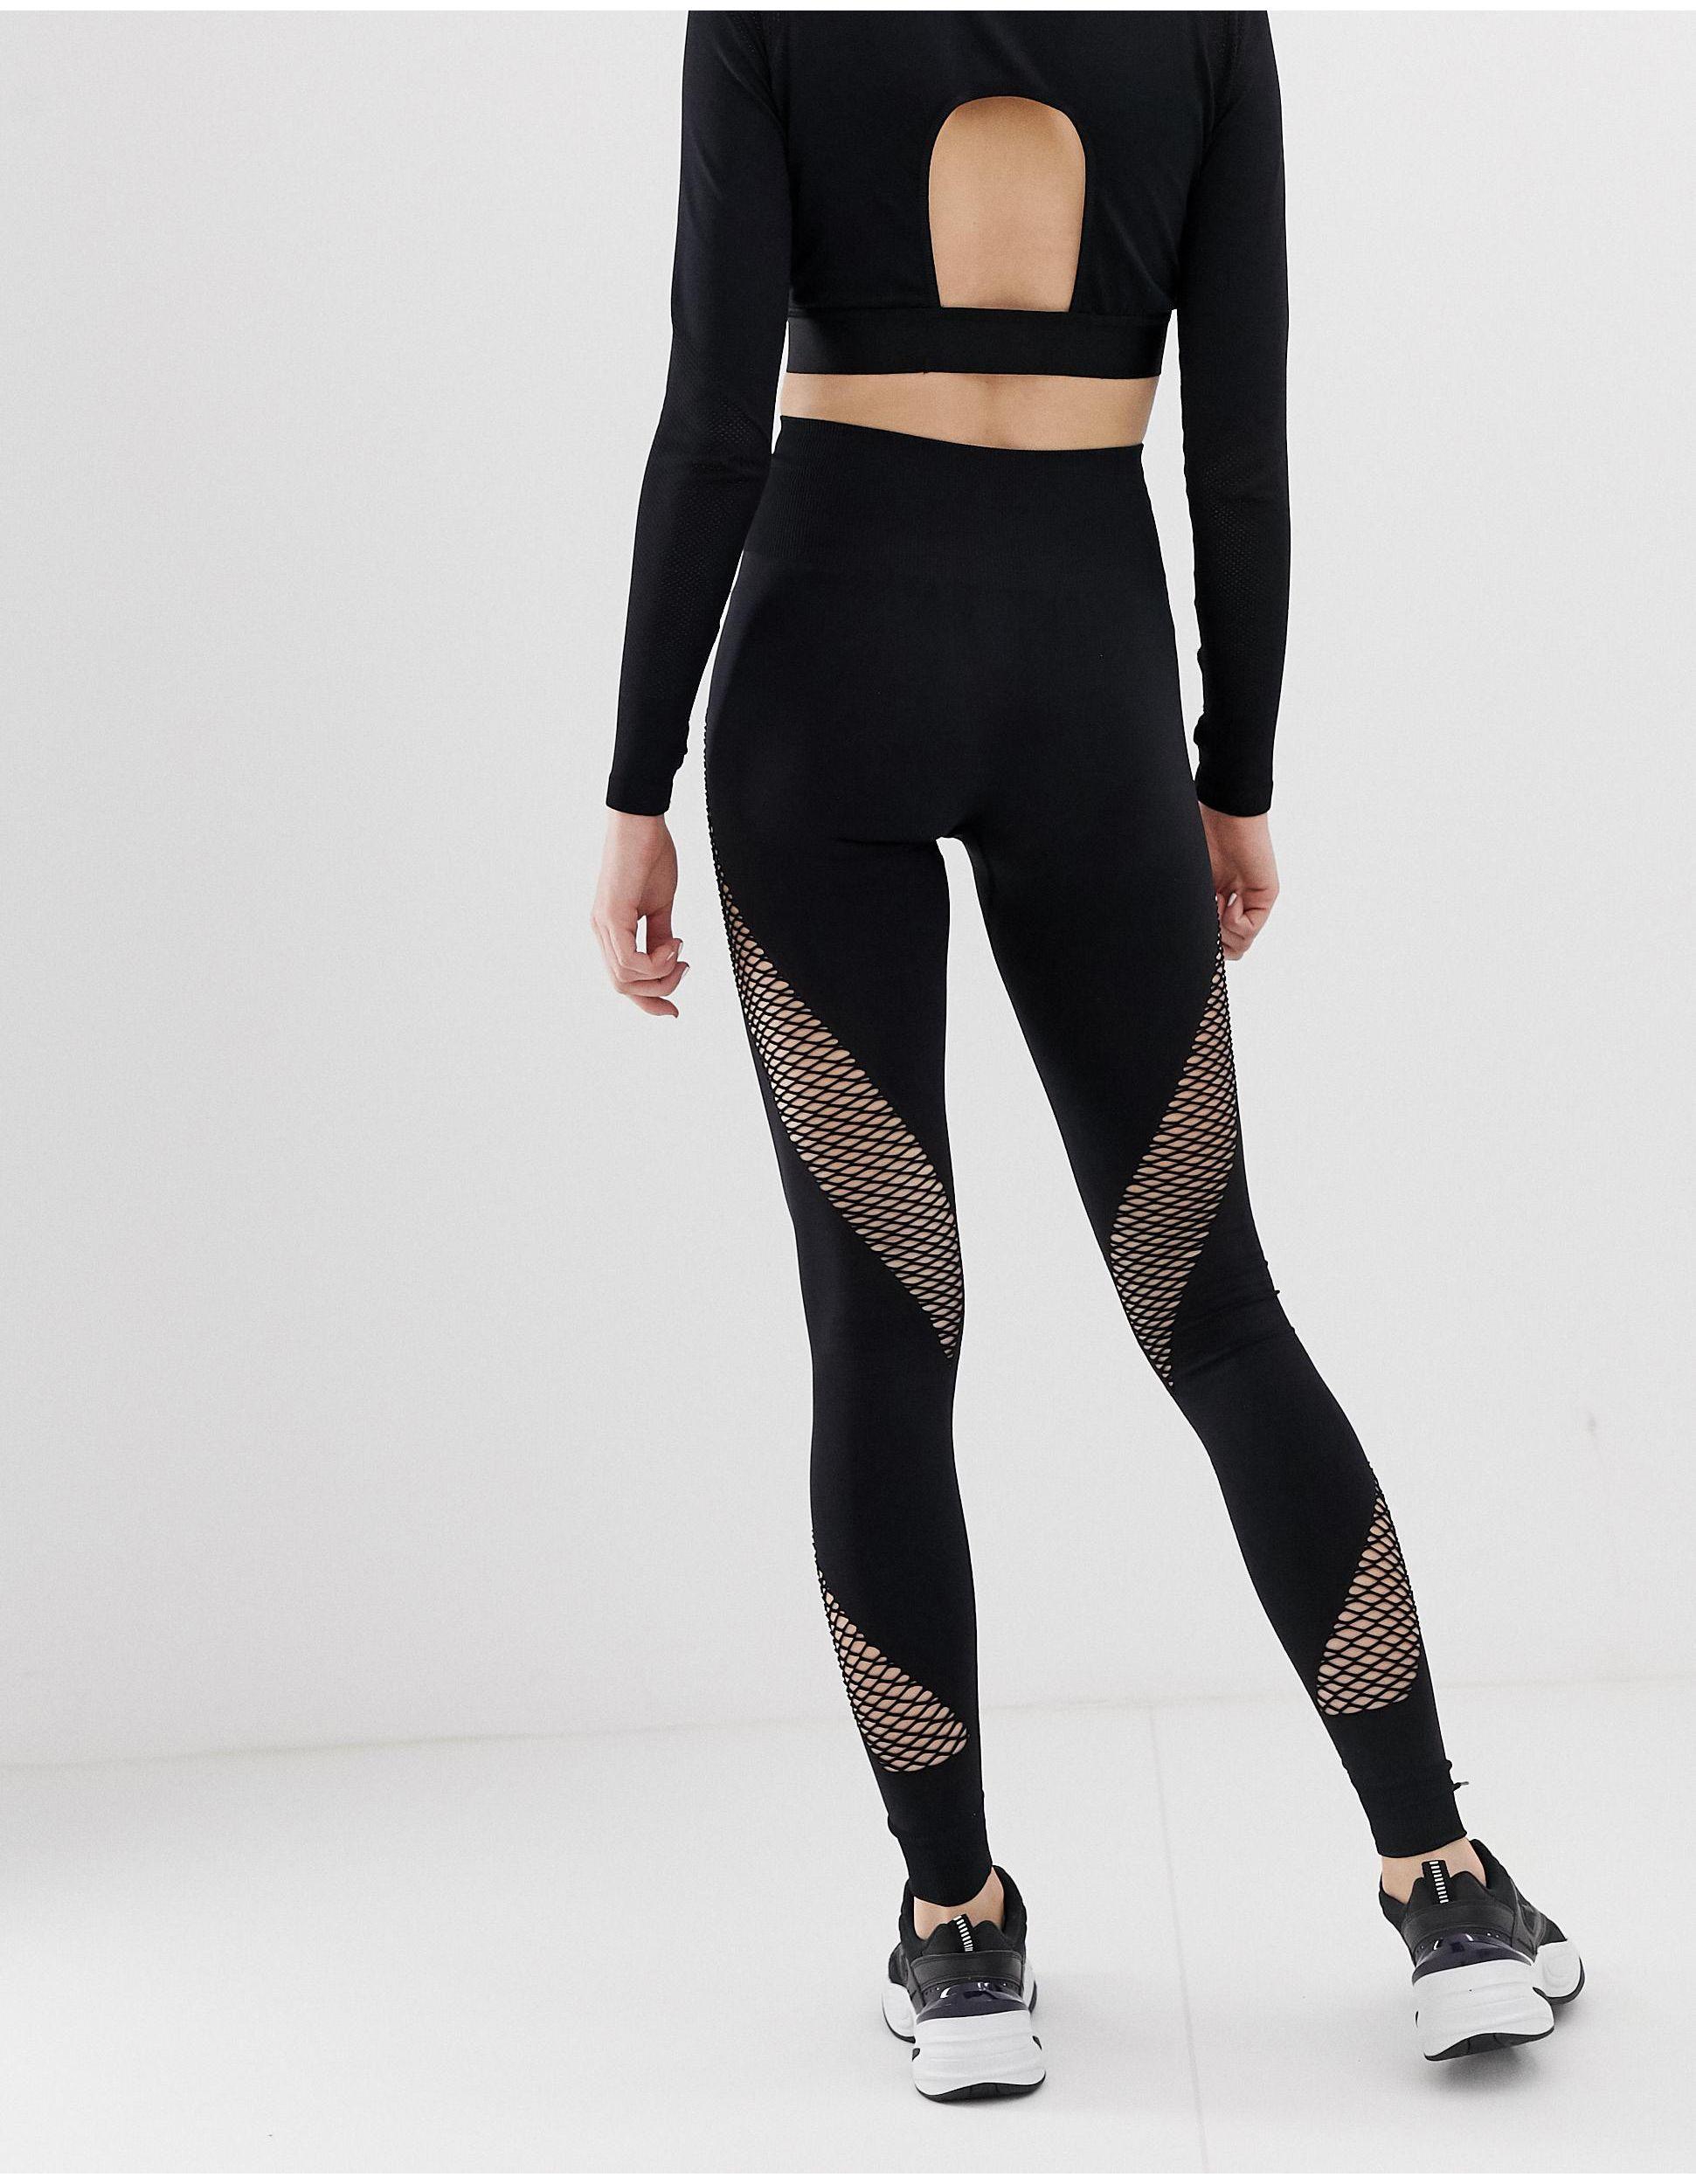 Discover 201+ black knit leggings latest